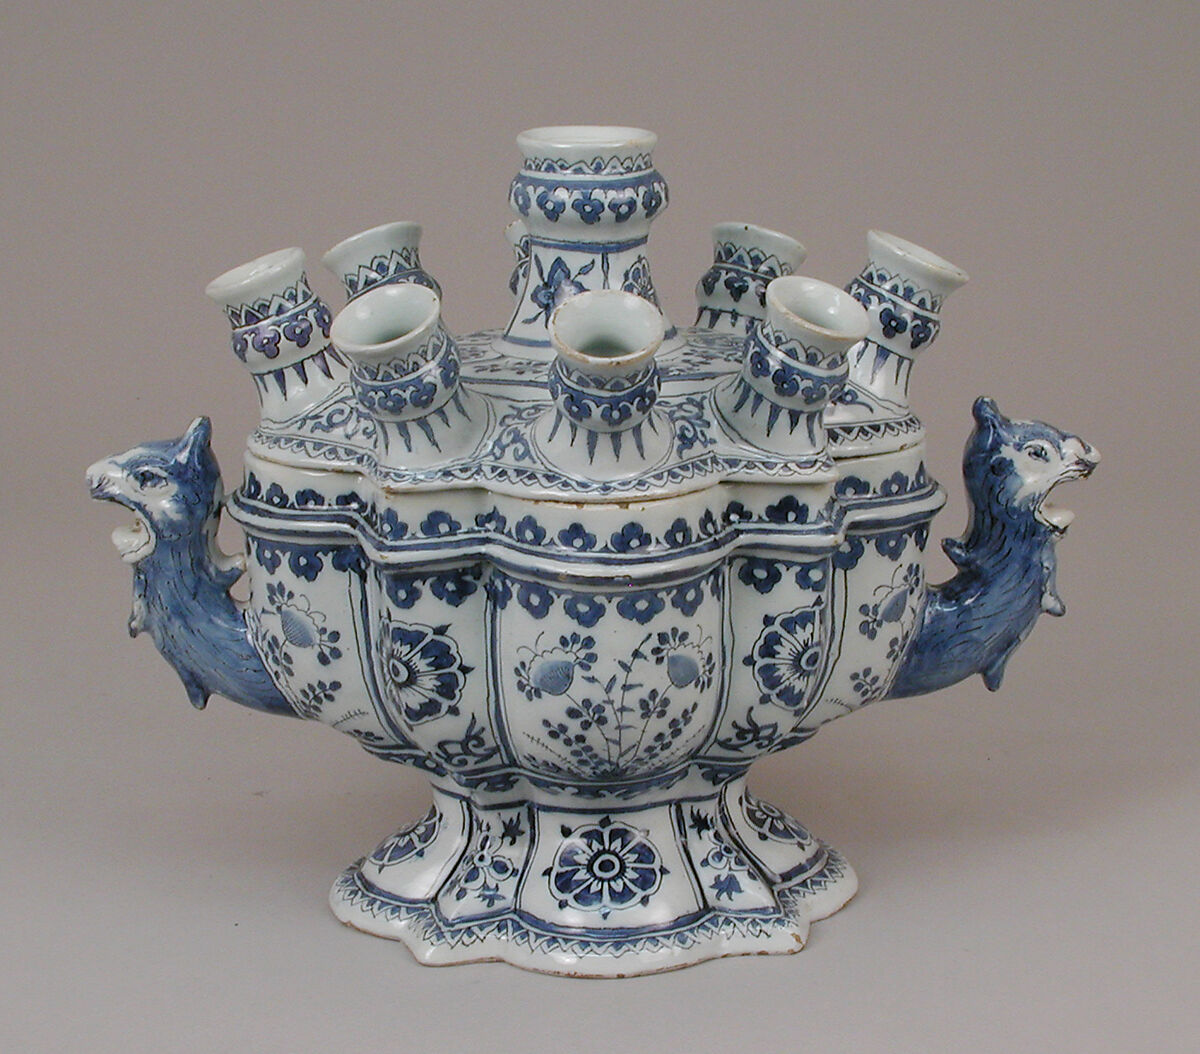 Flower vase, The "Greek A" Factory, Delftware (tin-glazed earthenware), Dutch, Delft 